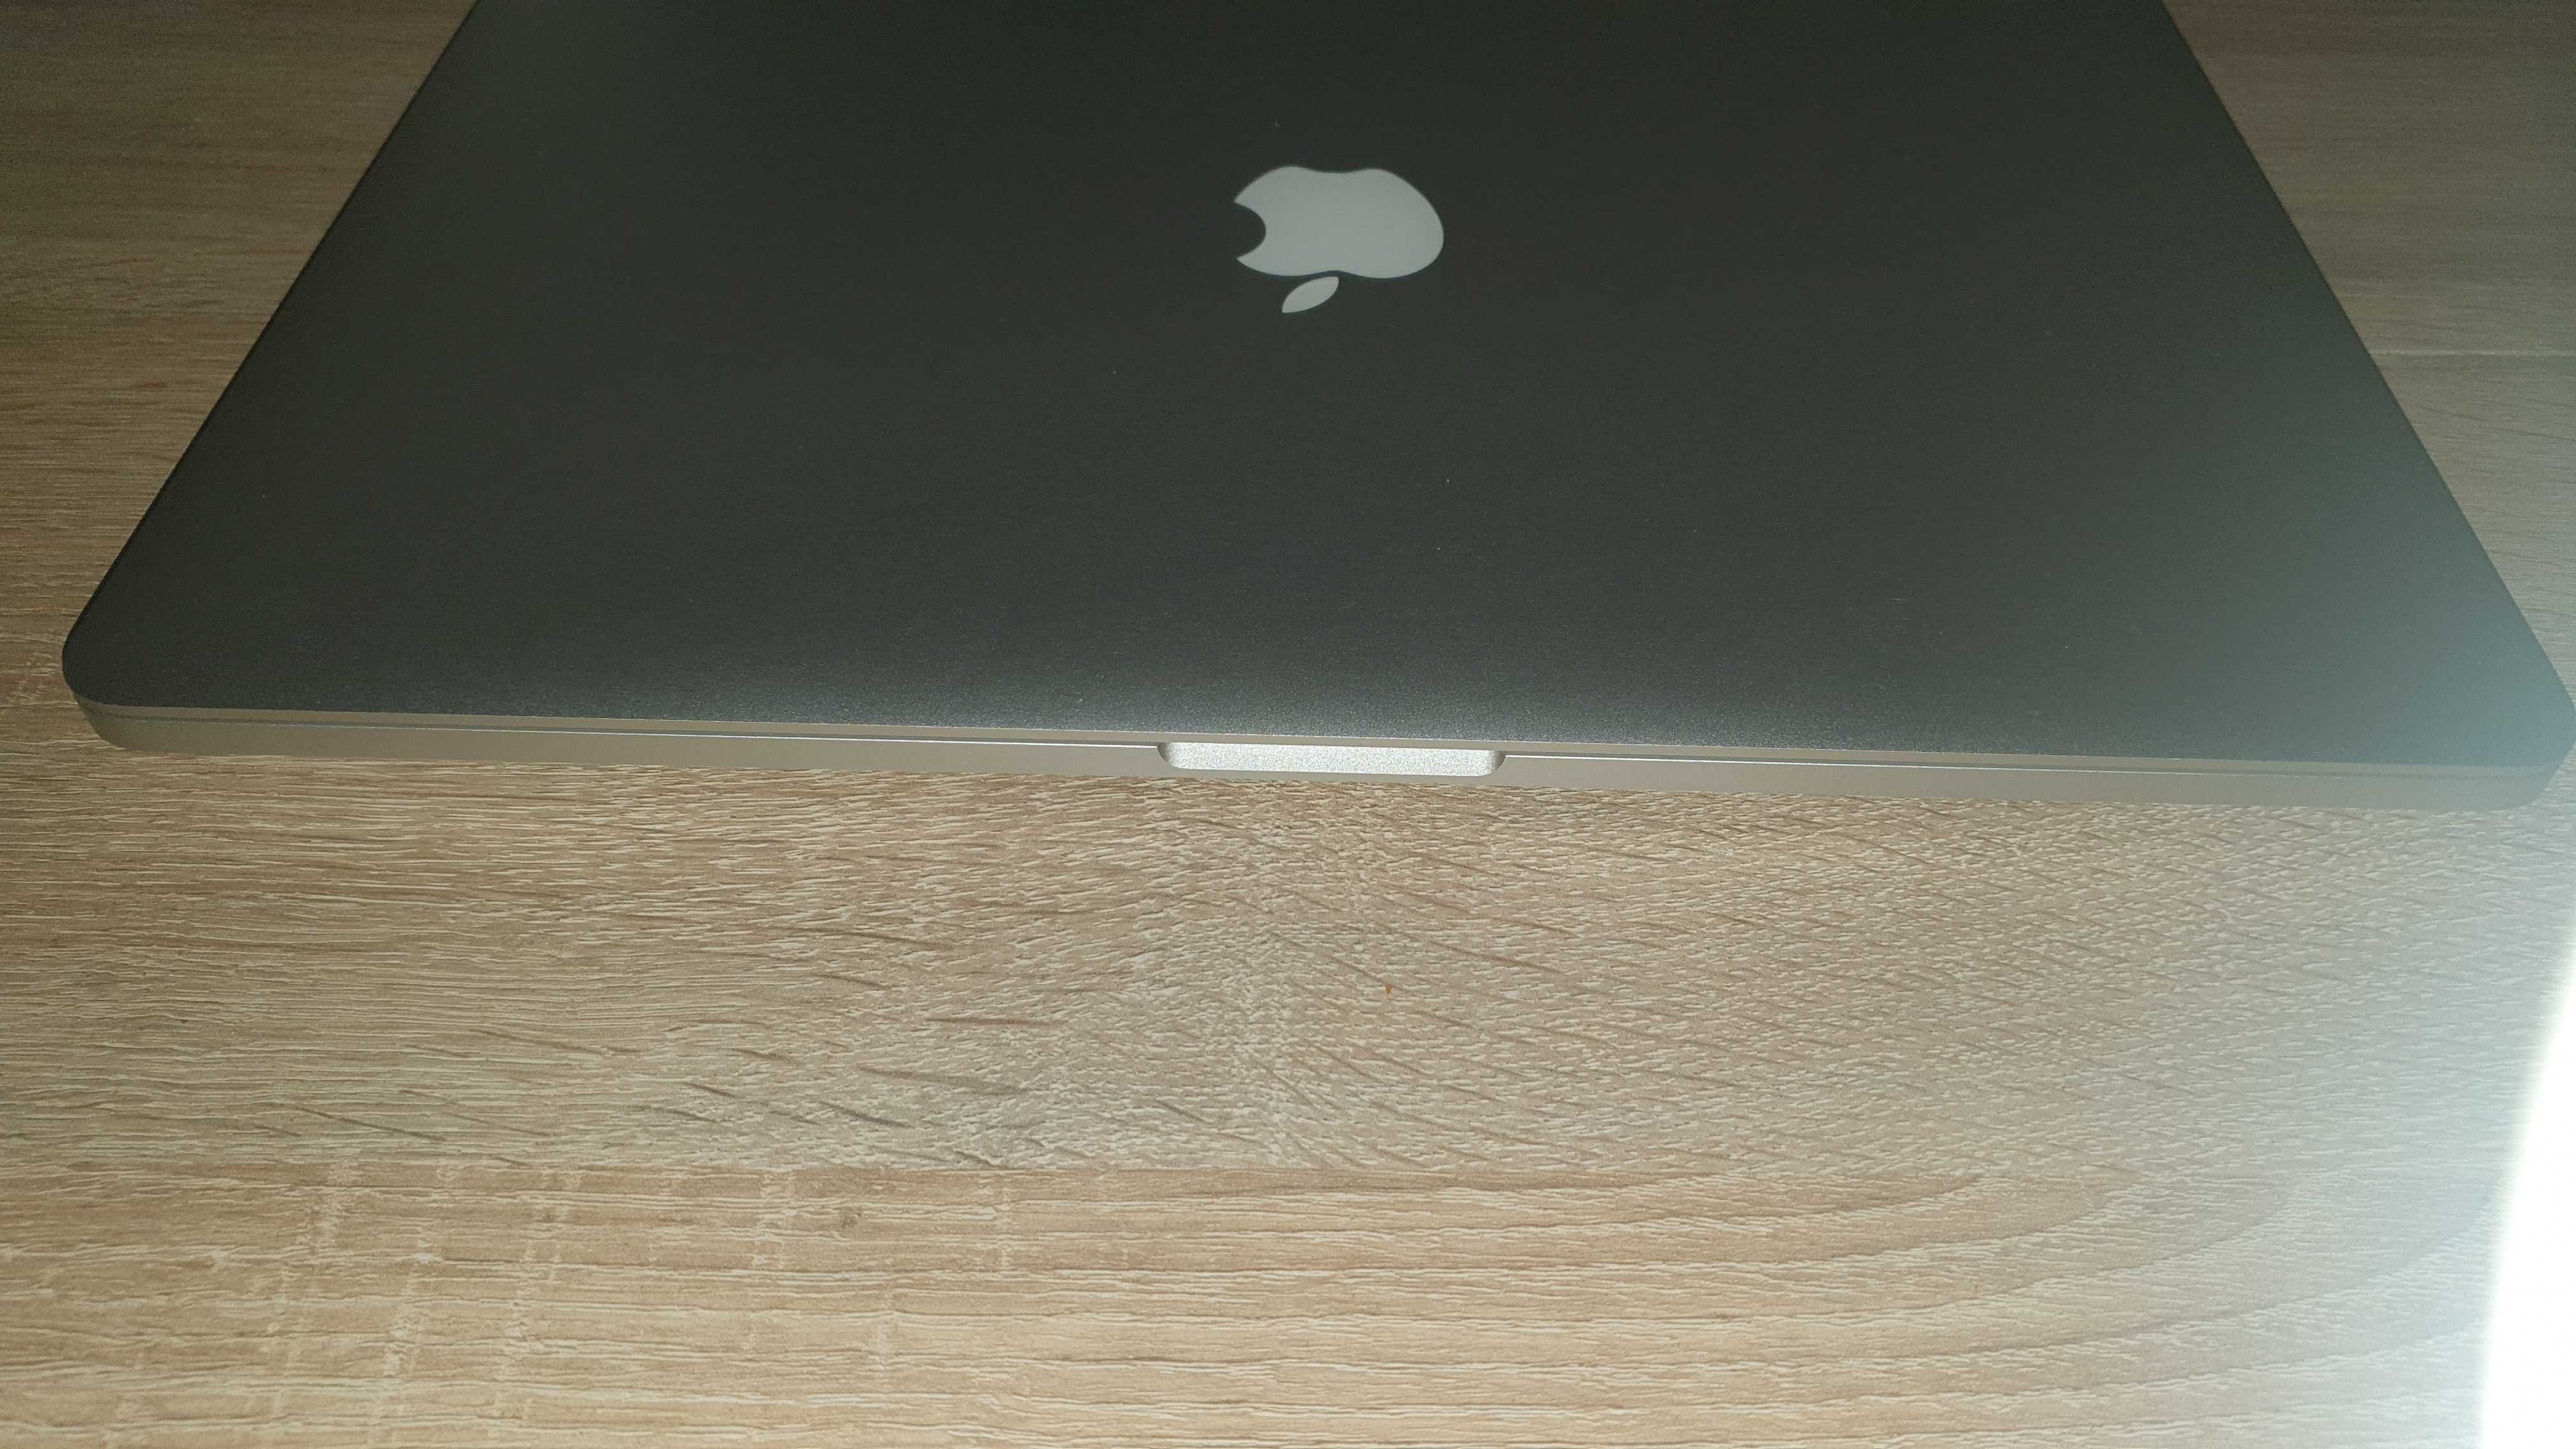 MacBook Pro i7 Retina 15 Mid 2015 16GB RAM 256 SSD Laptop Cycle C. 371